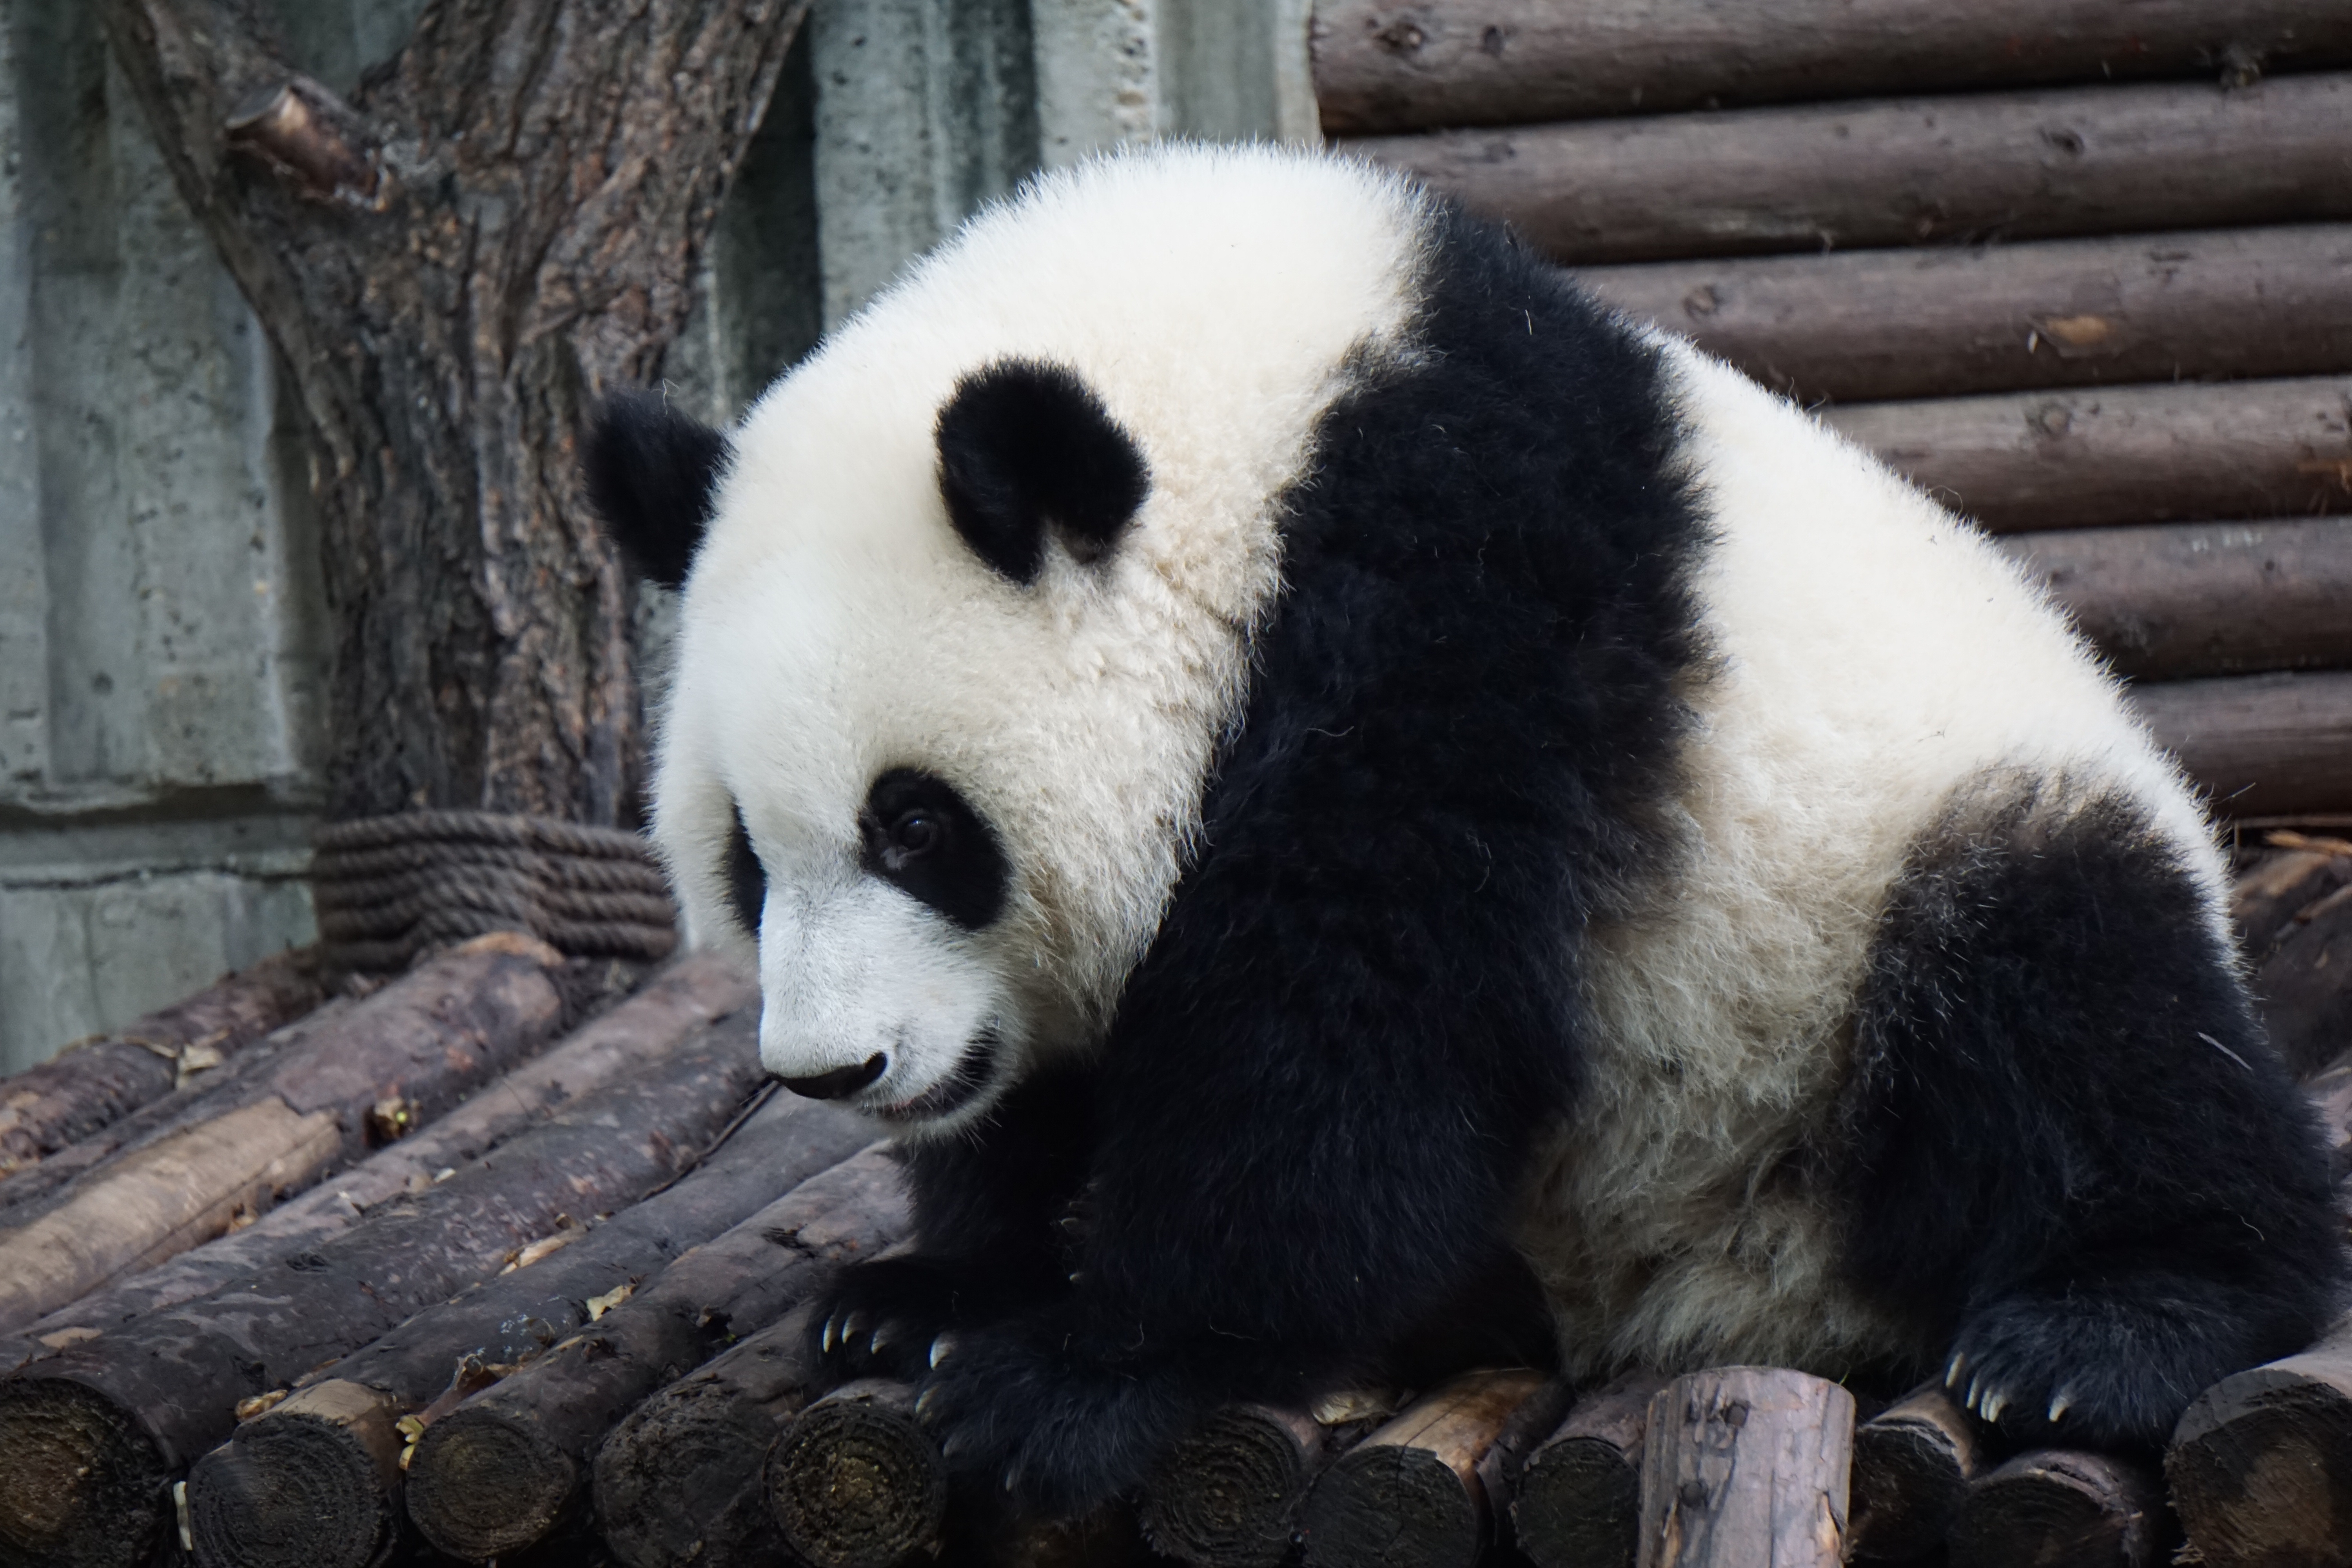 A black and white fluffy panda